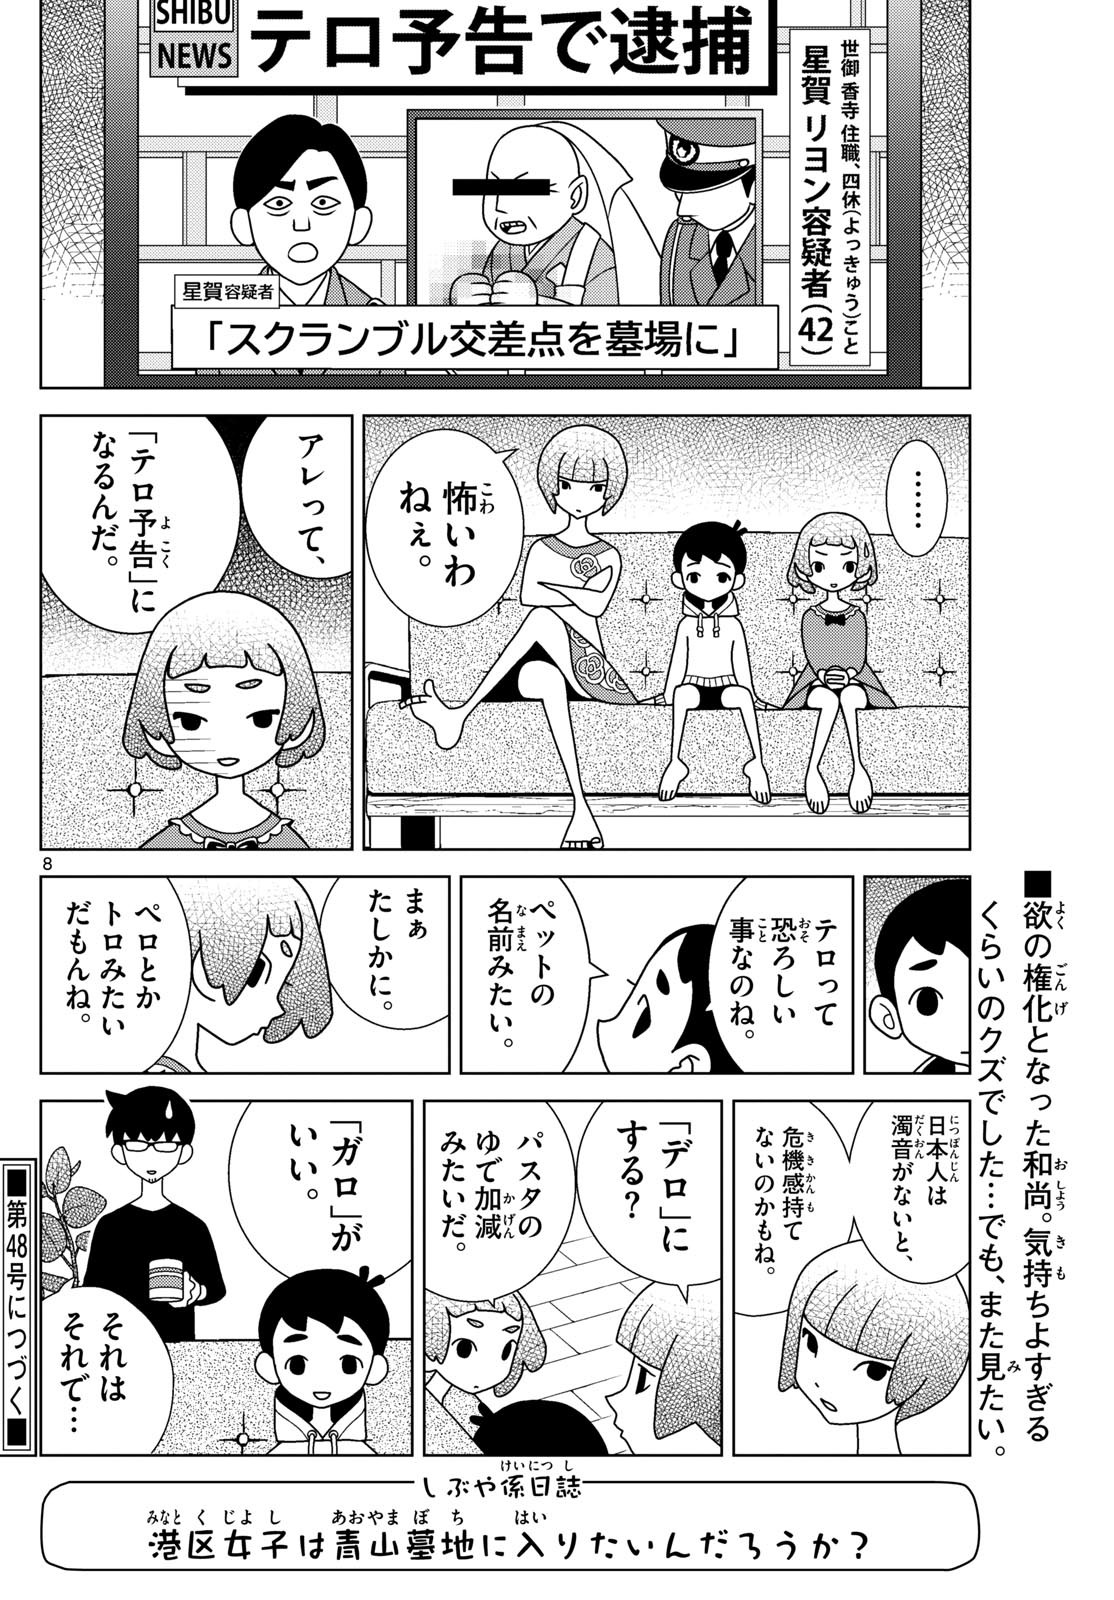 Shibuya Near Family - Chapter 075 - Page 8